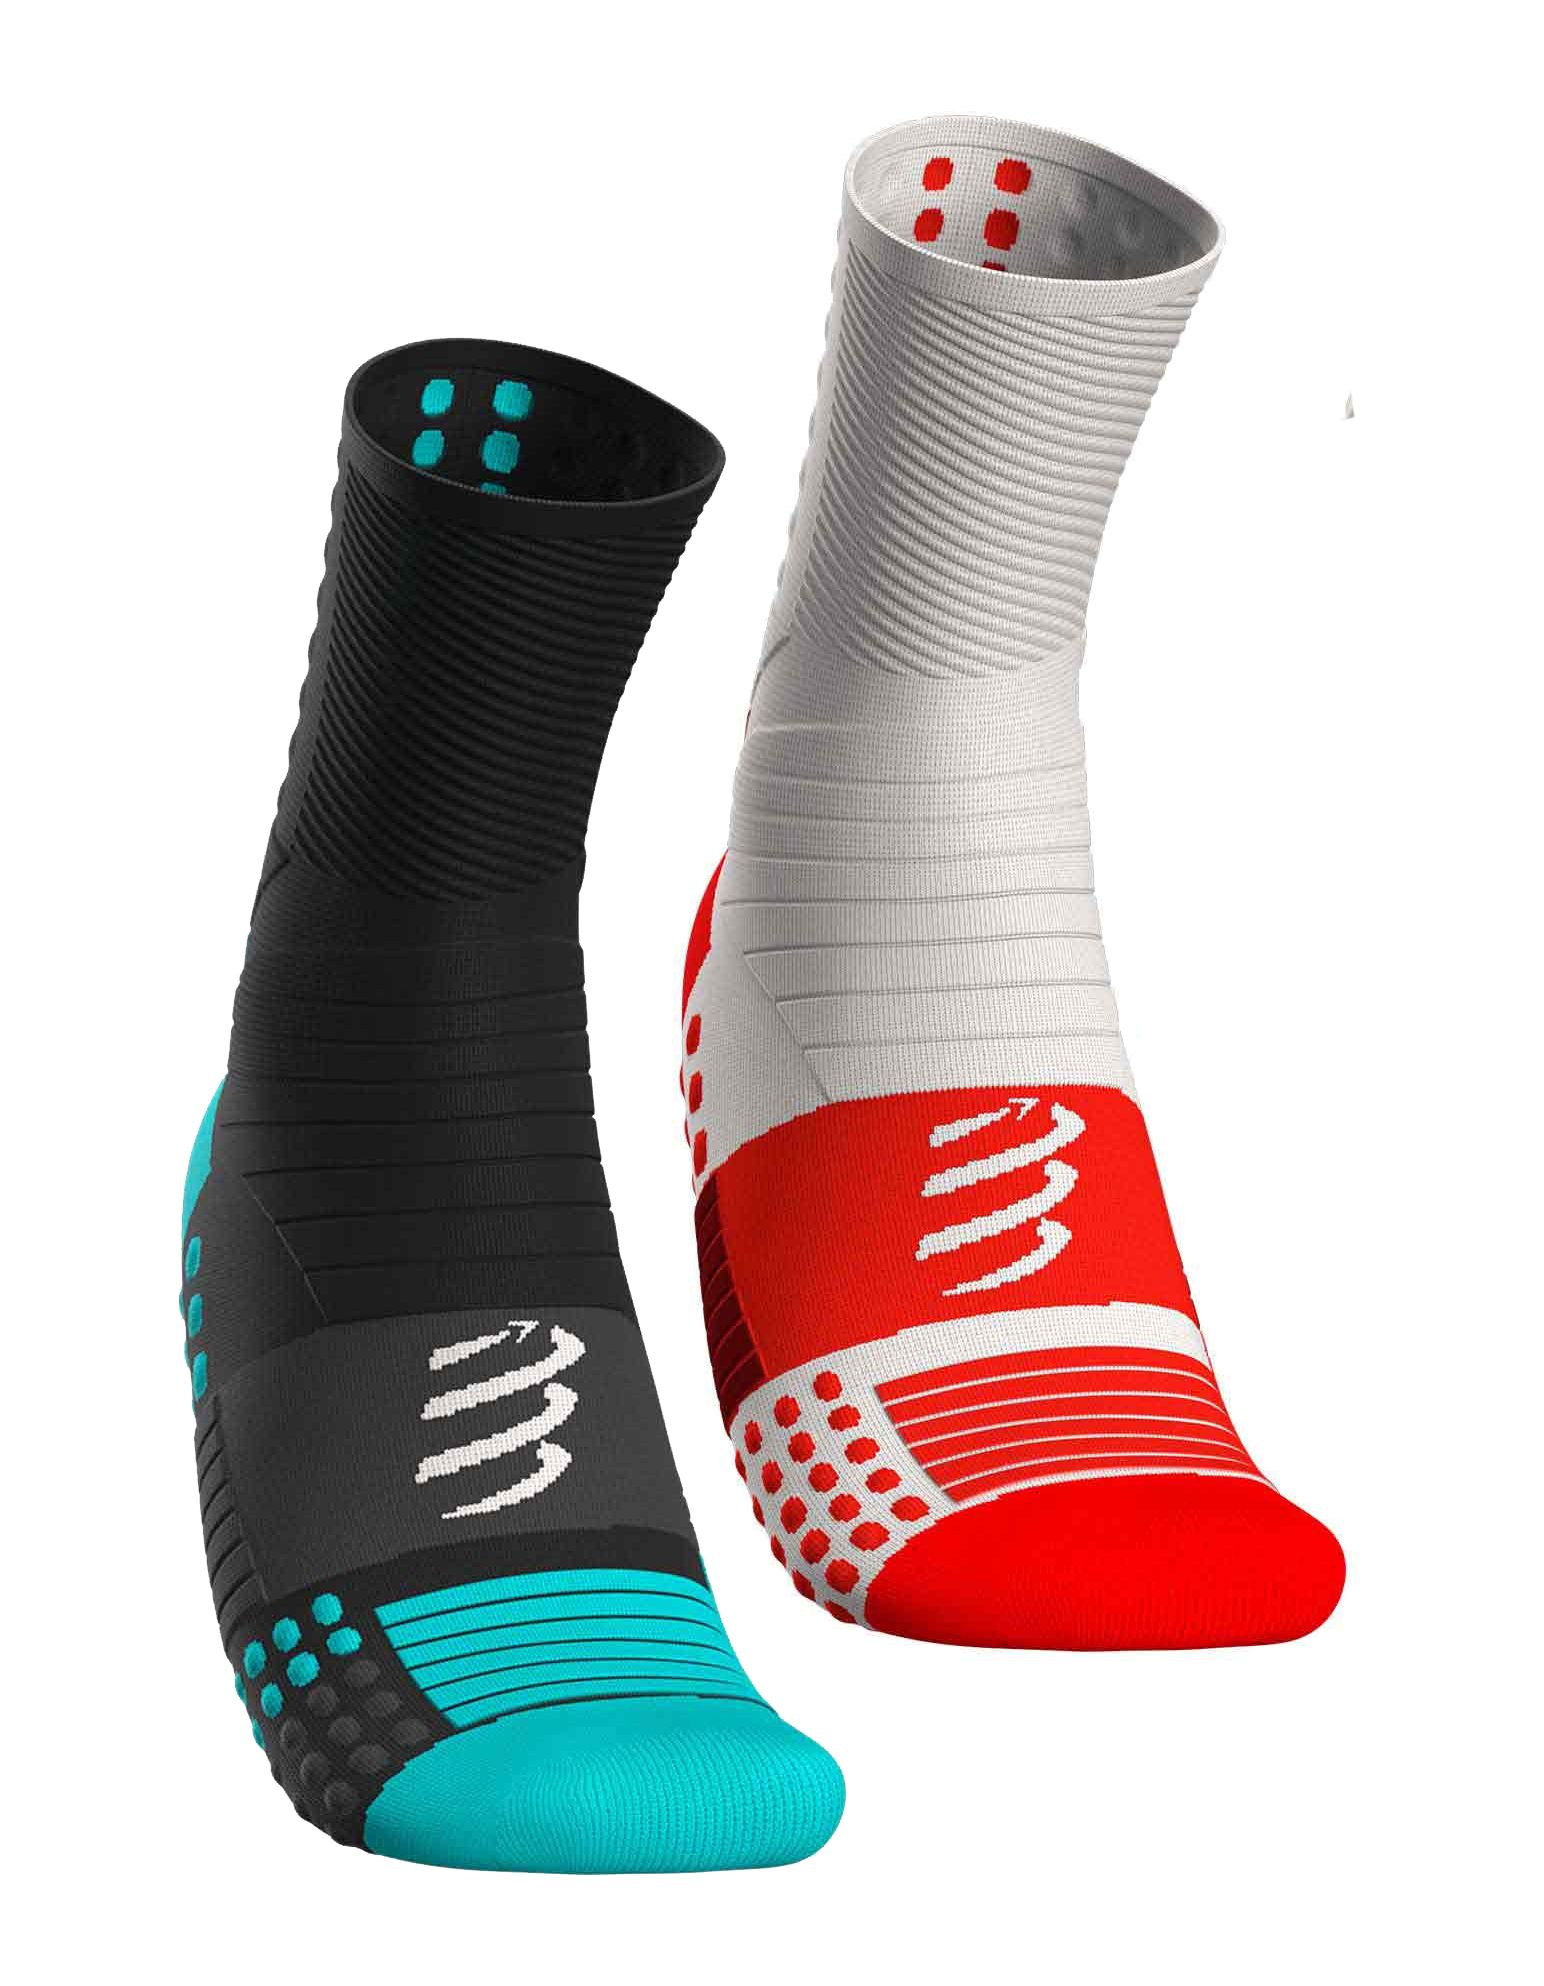 Compressport Pro Marathon Socks - £20.46 | Lower Body Compression ...